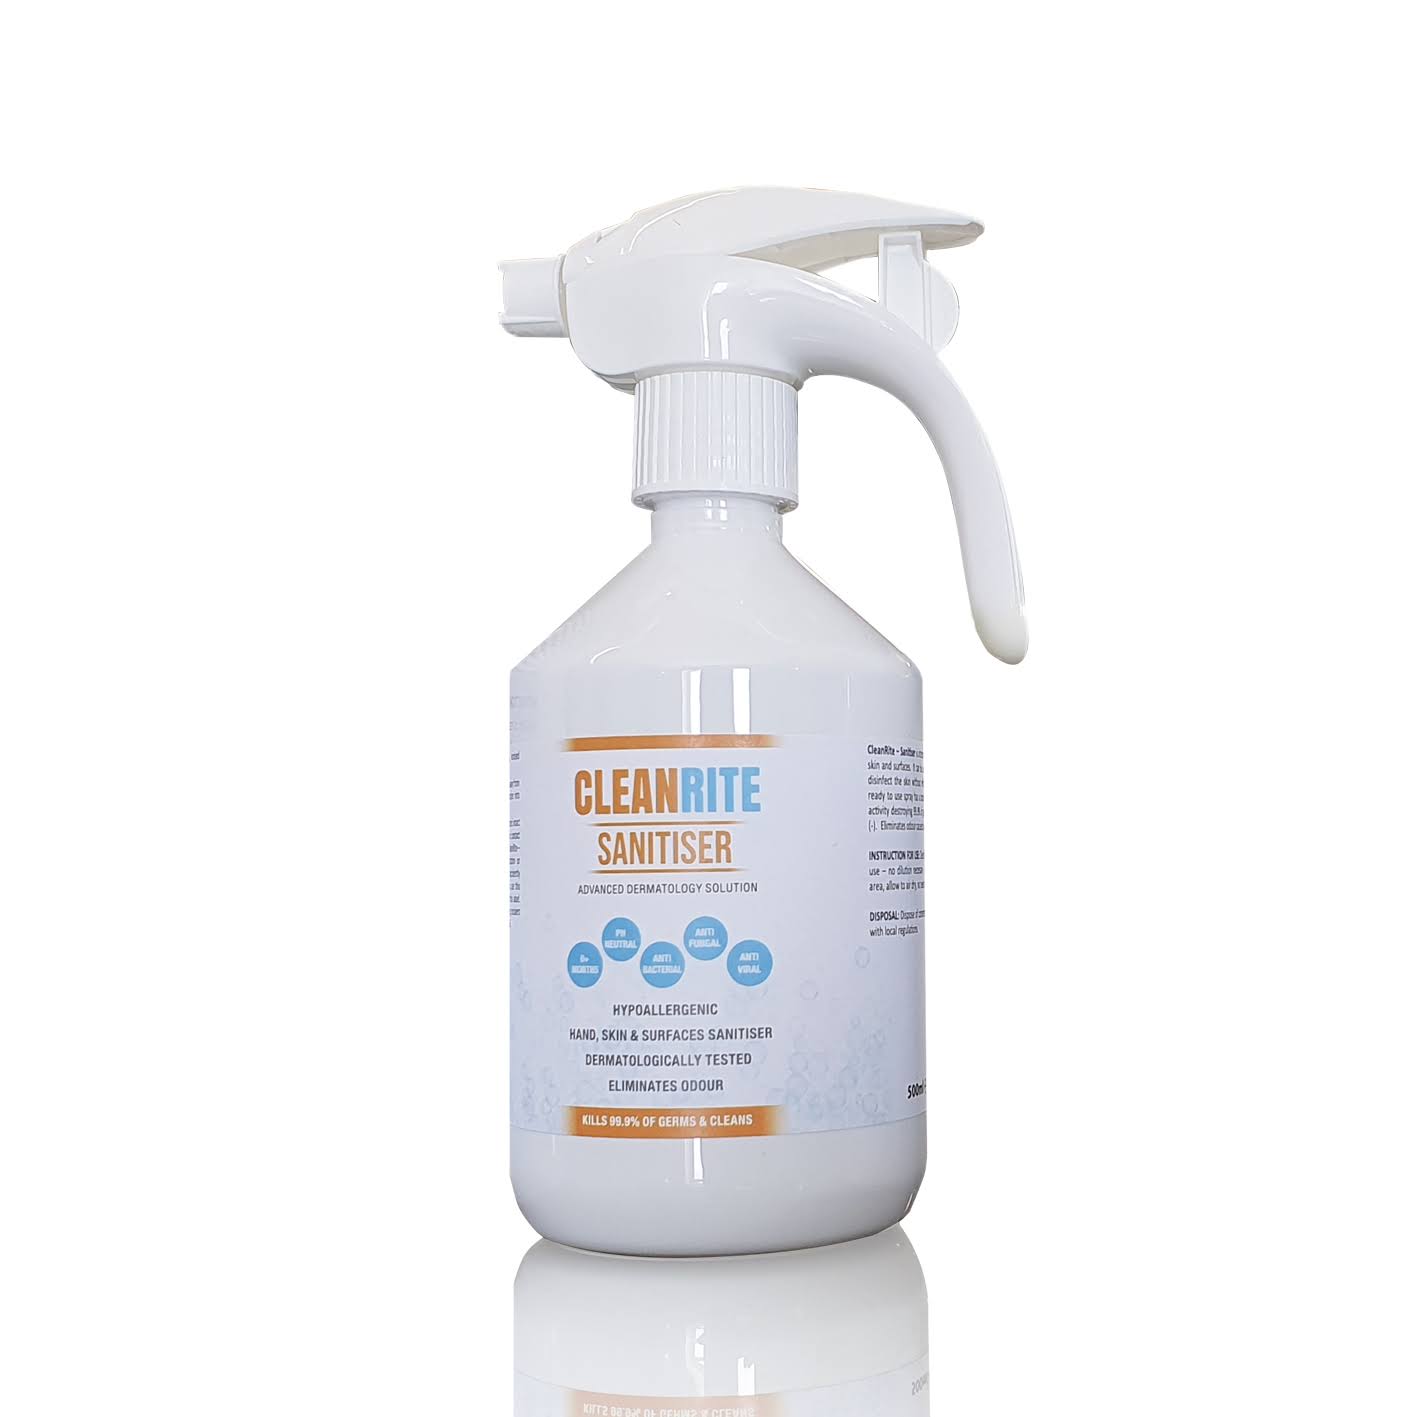 Cleanrite Hypoallergenic Sanitiser - 500ml Spray Bottle